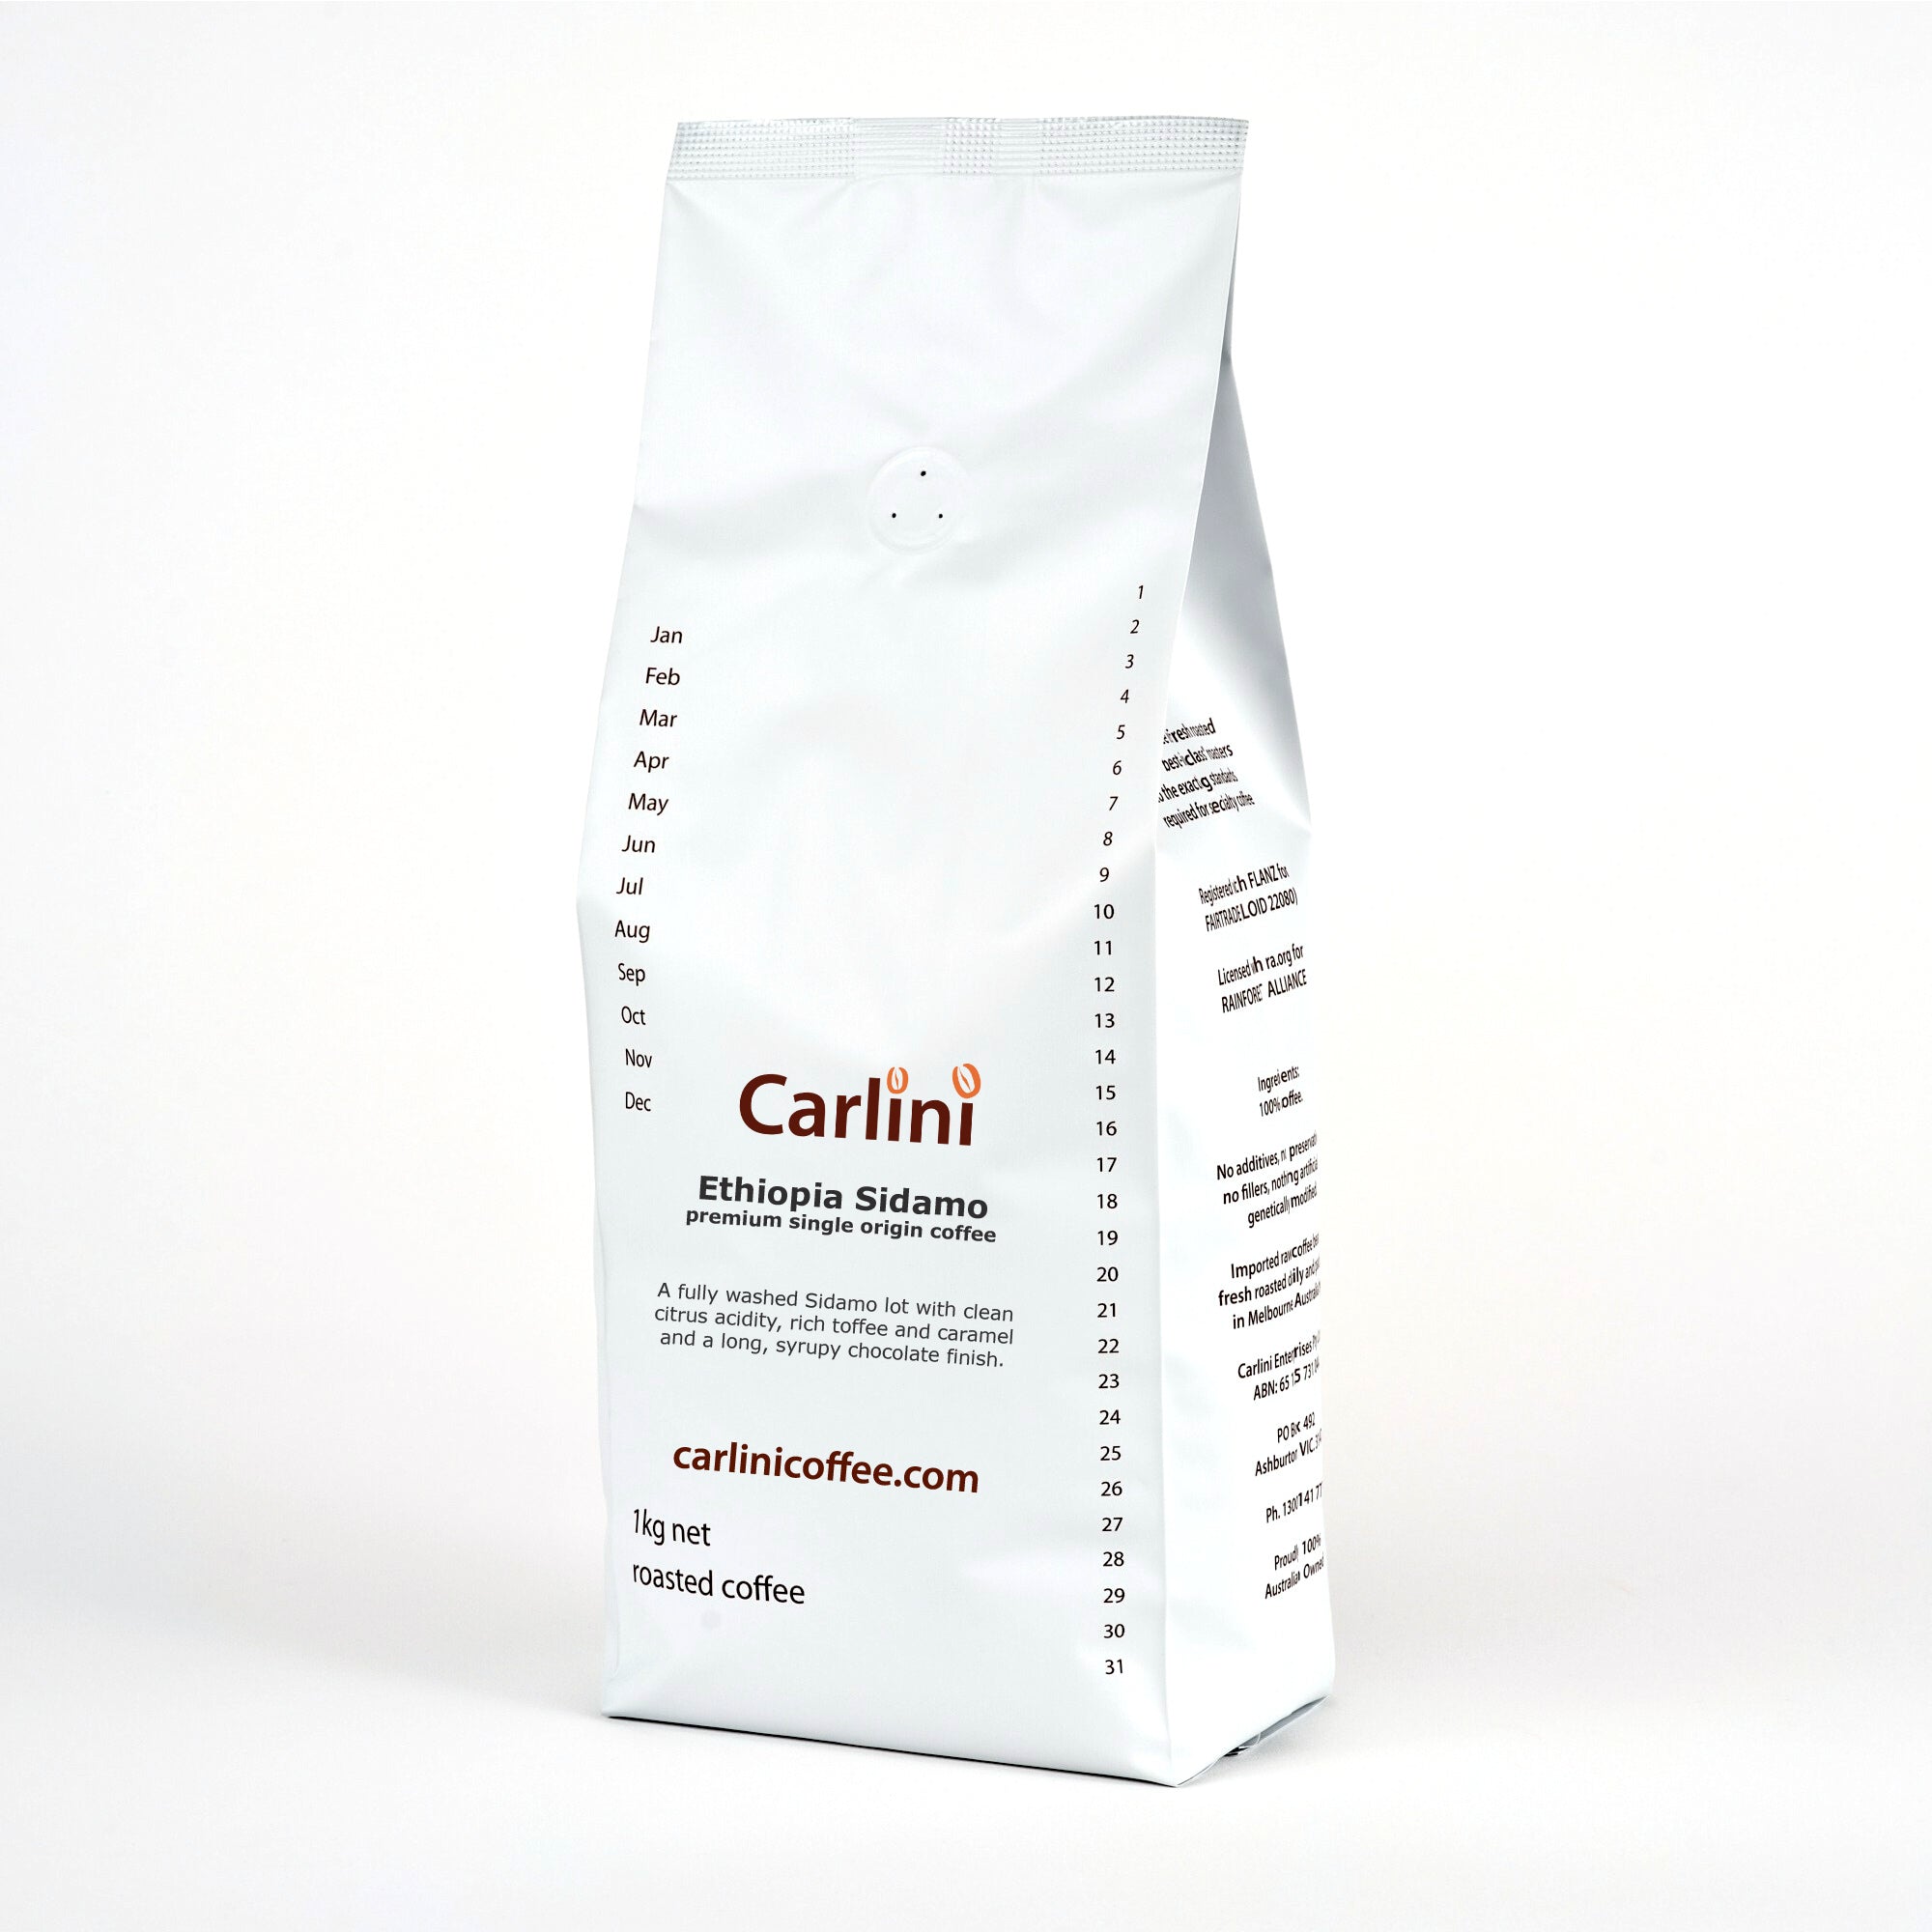 Carlini Coffee 1kg pack of premium single origin Ethiopia Sidamo coffee